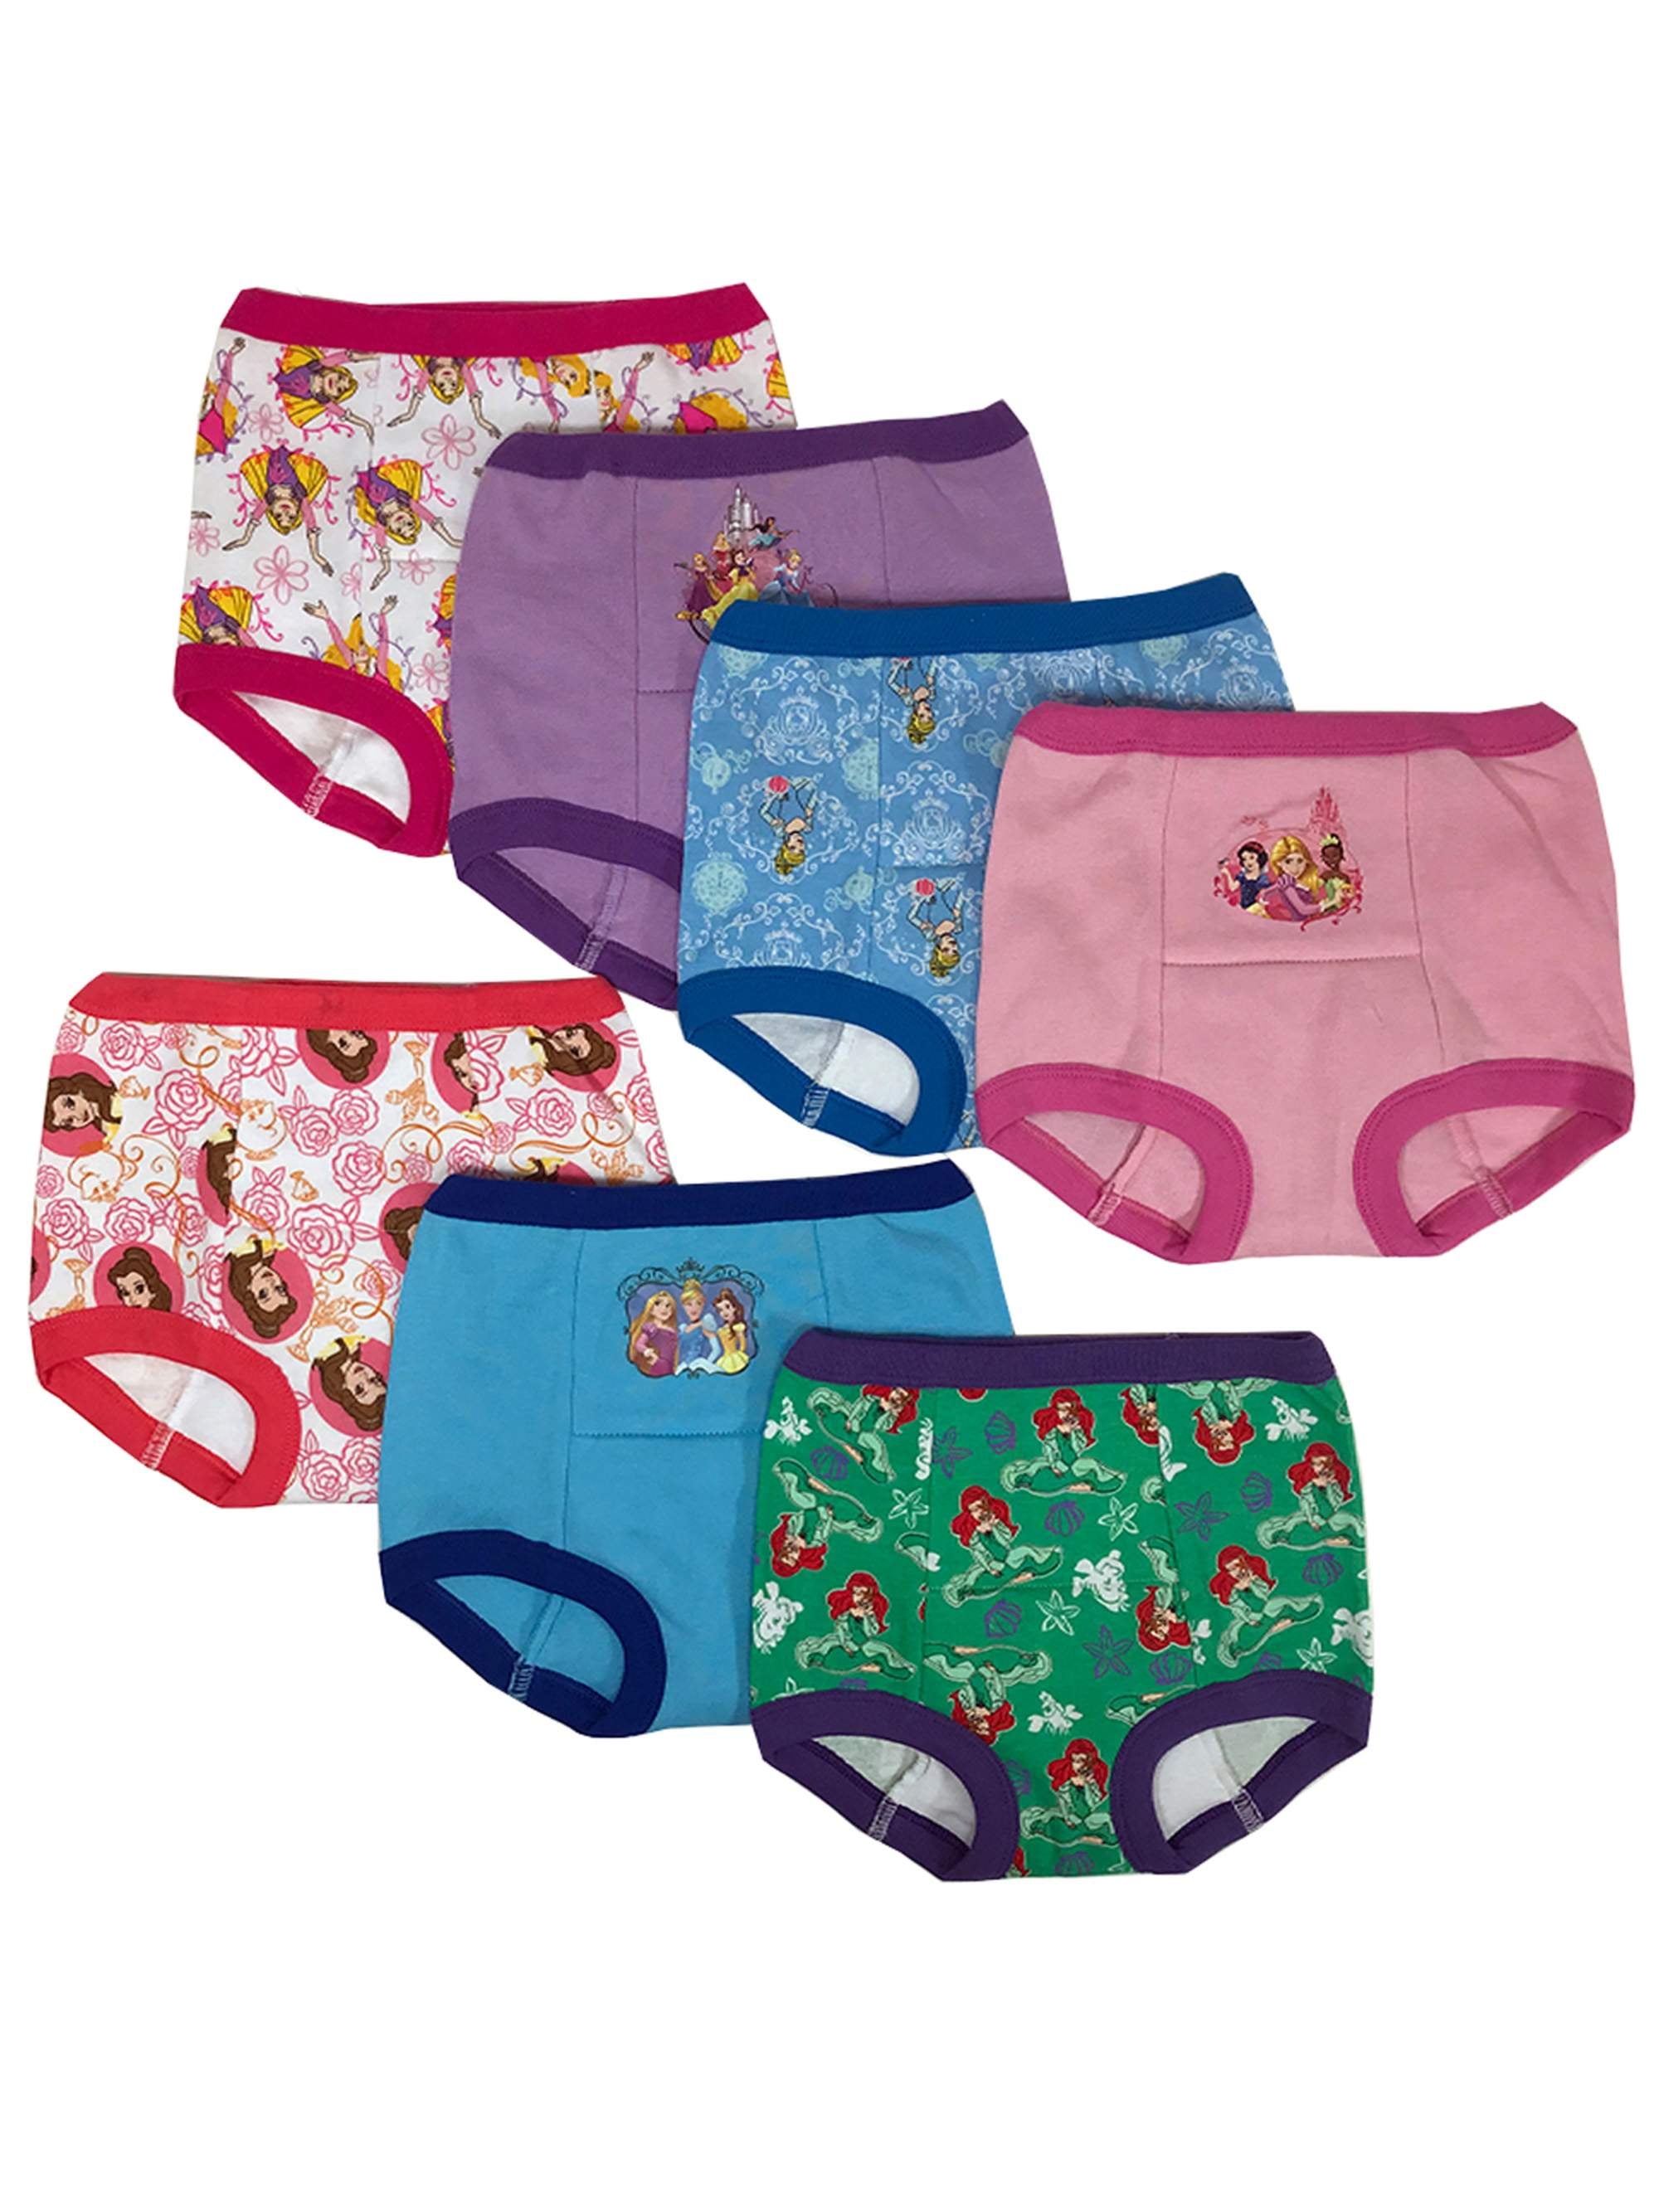 Disney Princess Toddler Girl Training Underwear, 7-Pack, Sizes 2T-5T